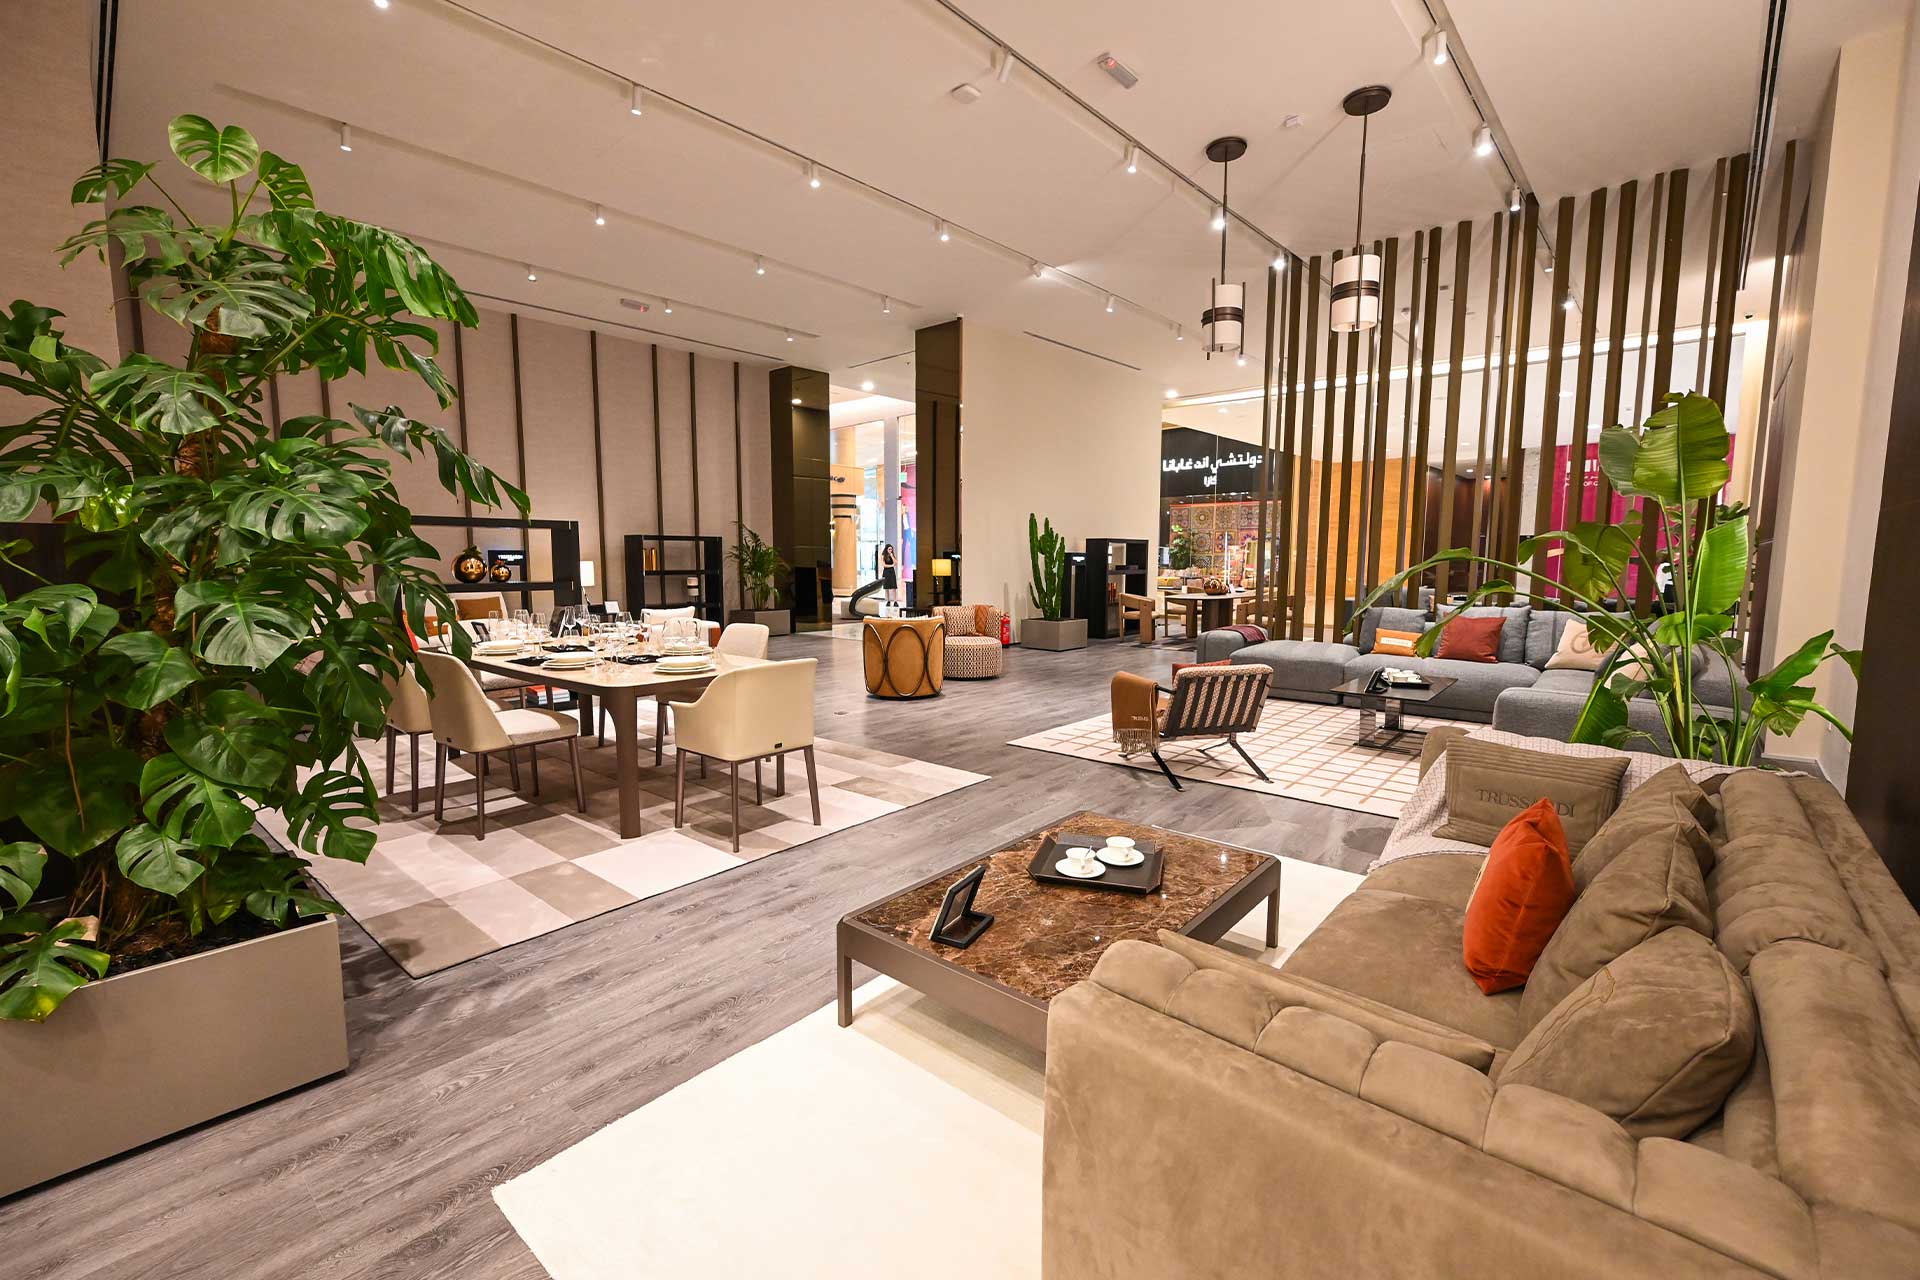 Luxury Living - Interior Design of Luxury Furniture Store in Mall of Qatar